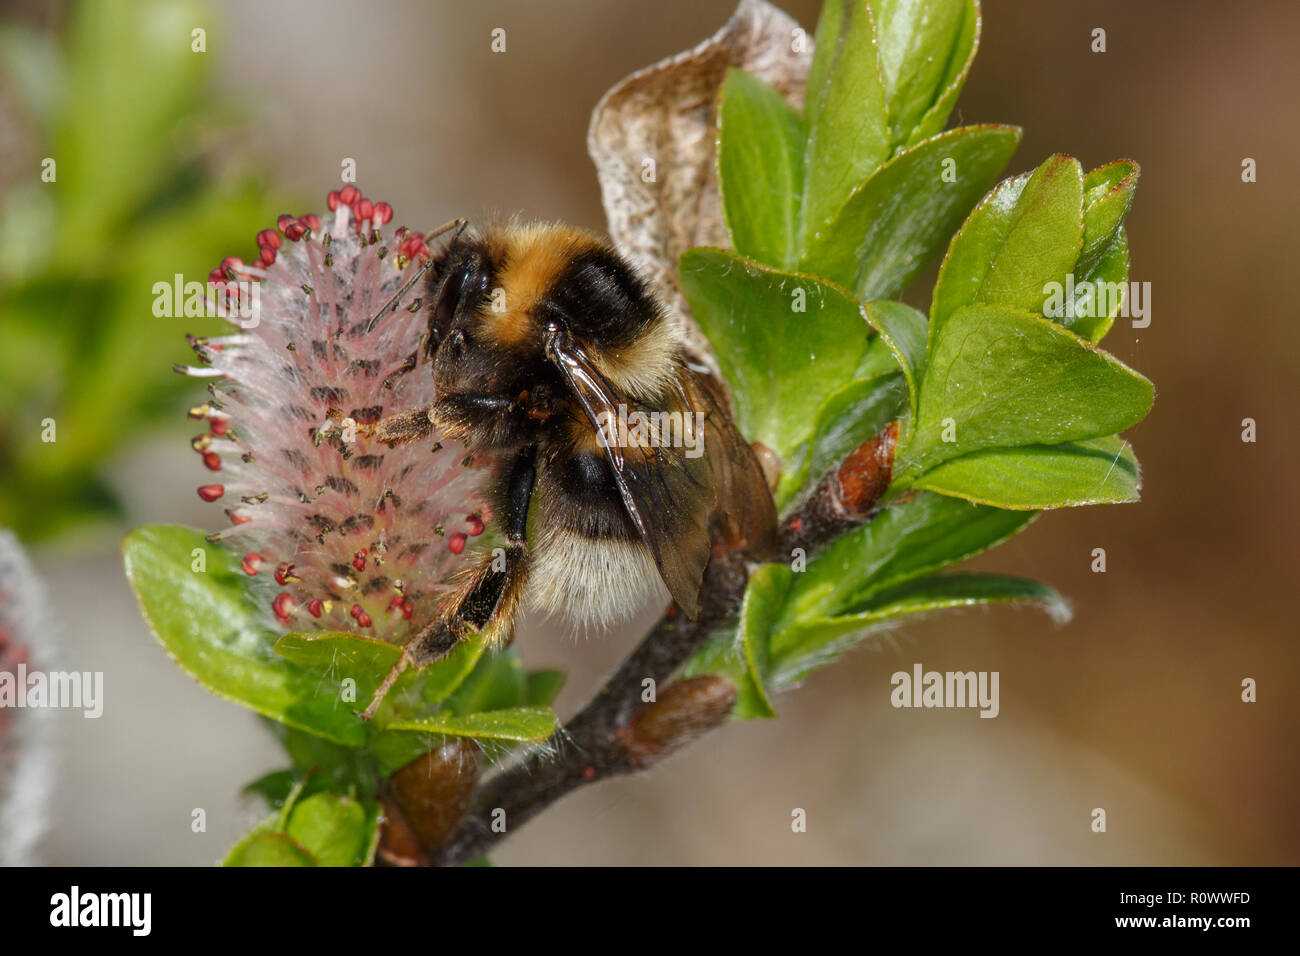 Heath Bumblebee, Bombus jonellus, on Whortle-leaved willow Stock Photo